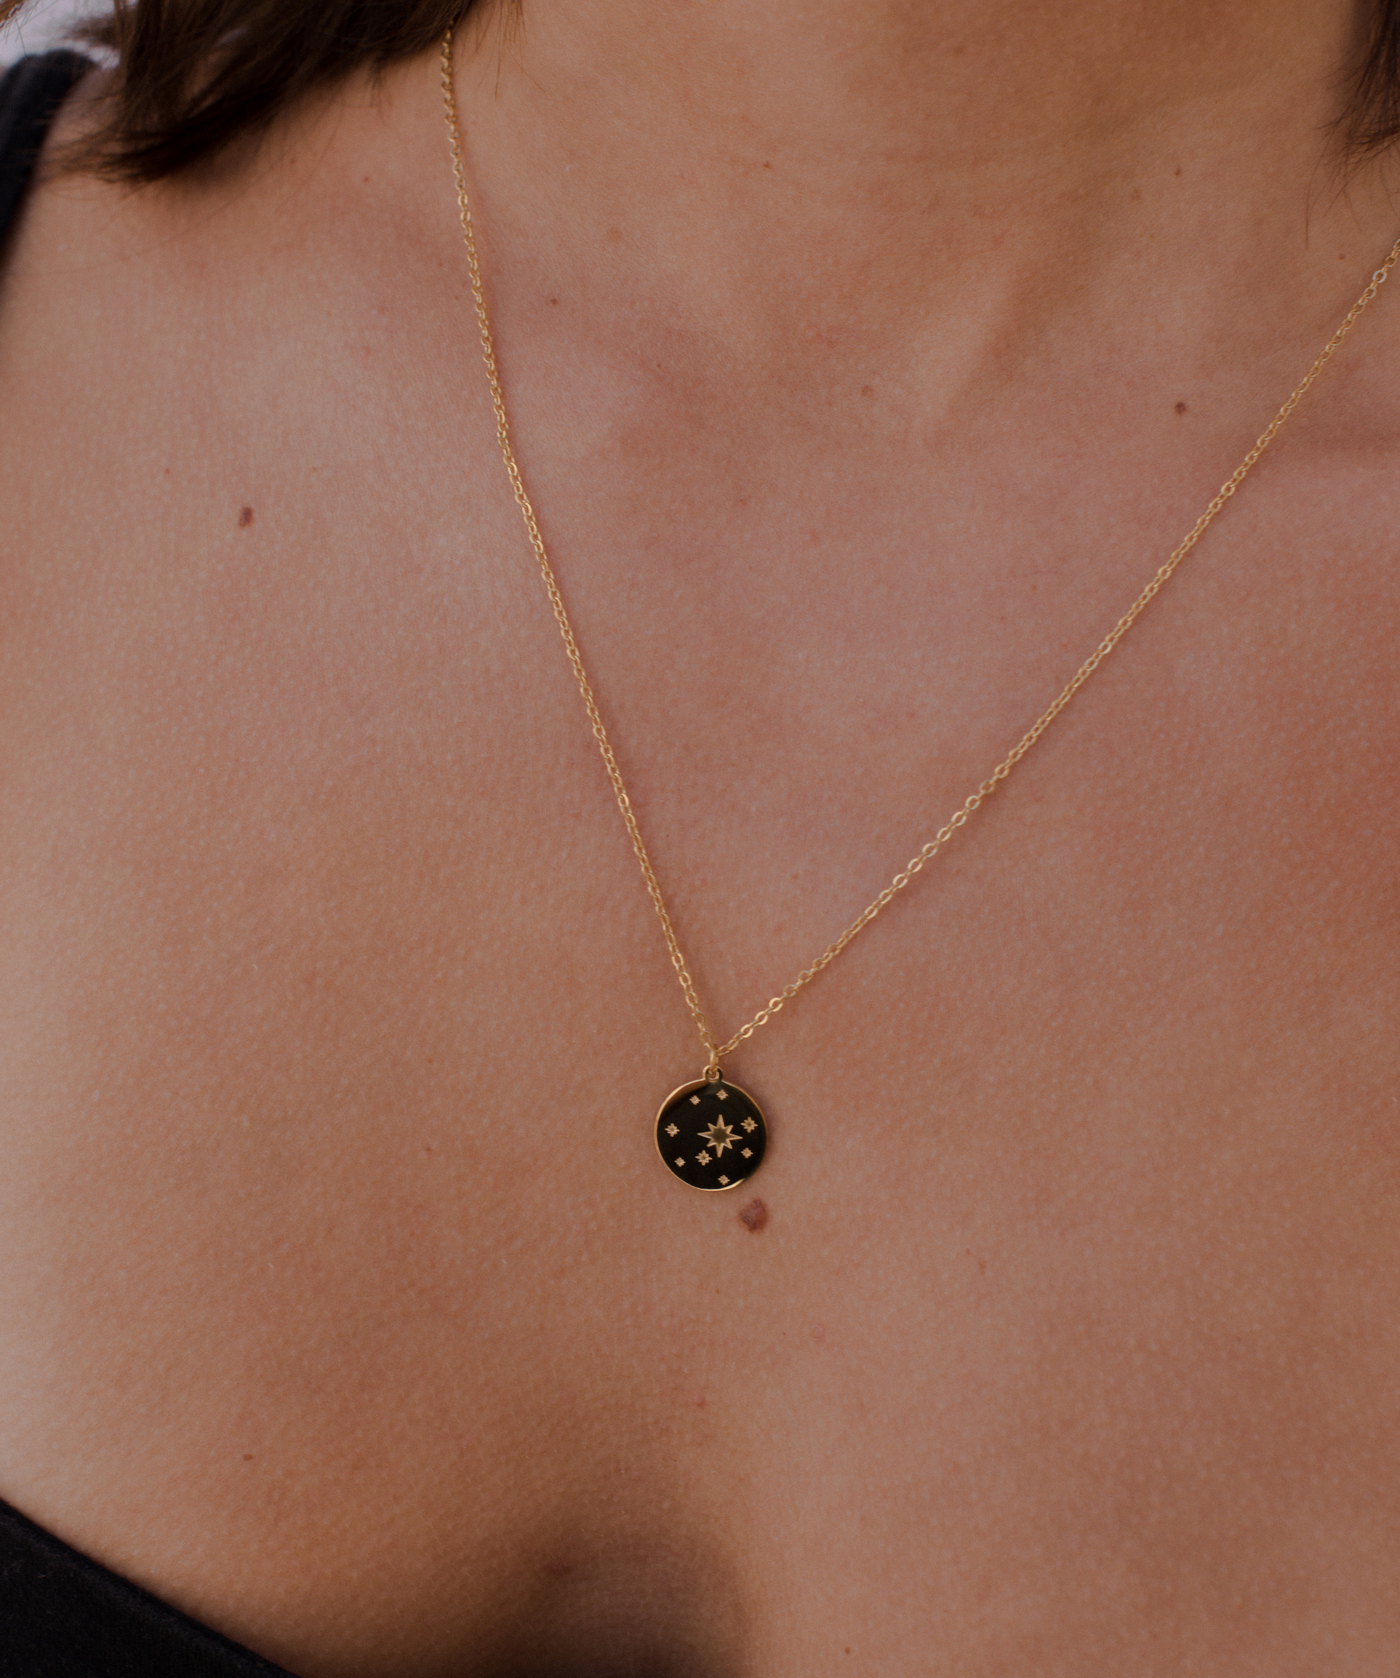 Junge Frau trägt Gold Kette mit minimalistischem Sternenhimmel Anhänger.